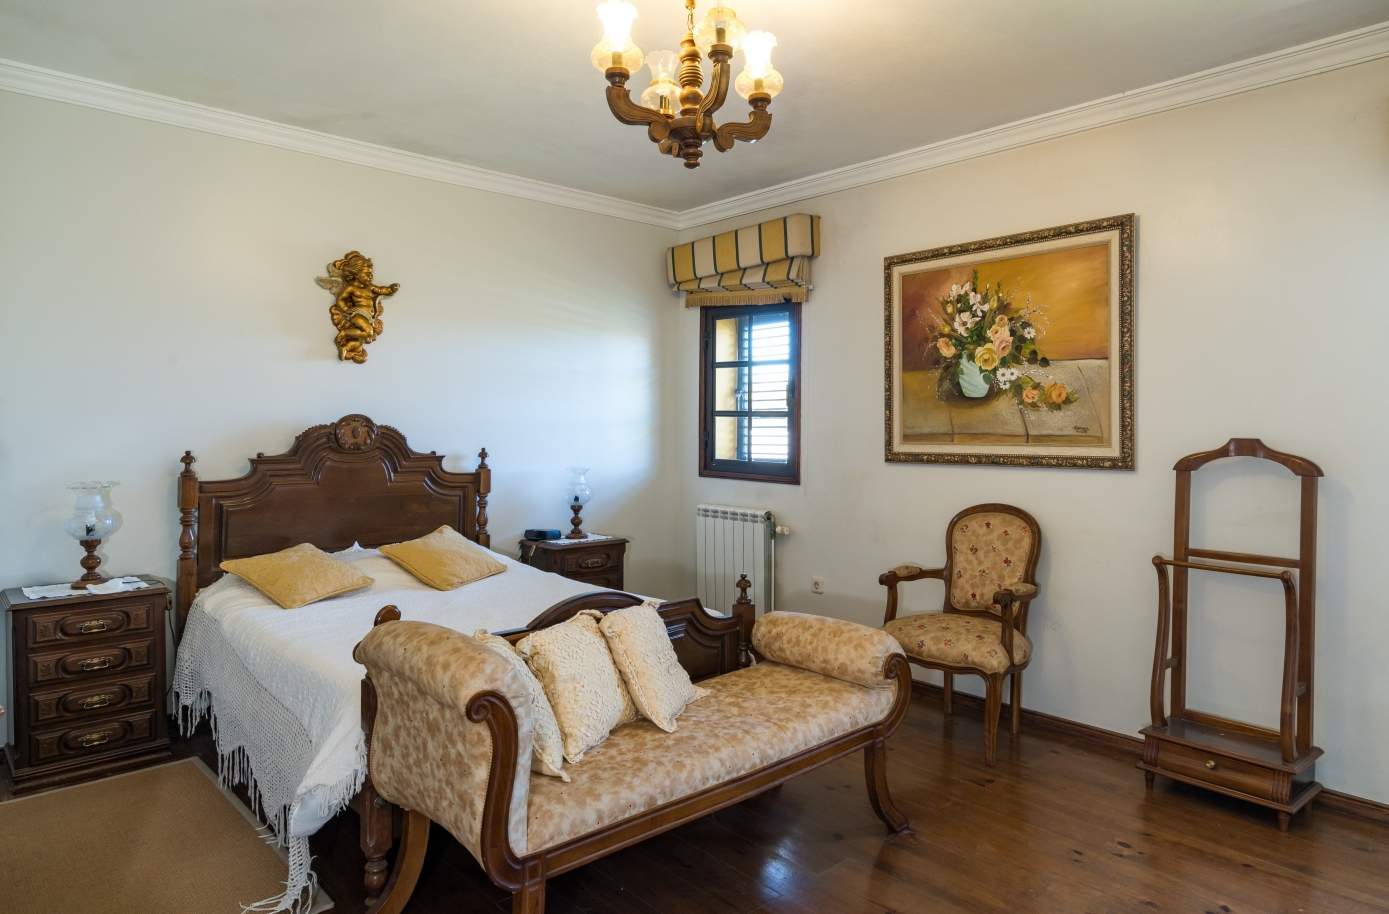 4 Bedroom Villa with plot of land, sale, Albufeira, Algarve, Portugal_143766